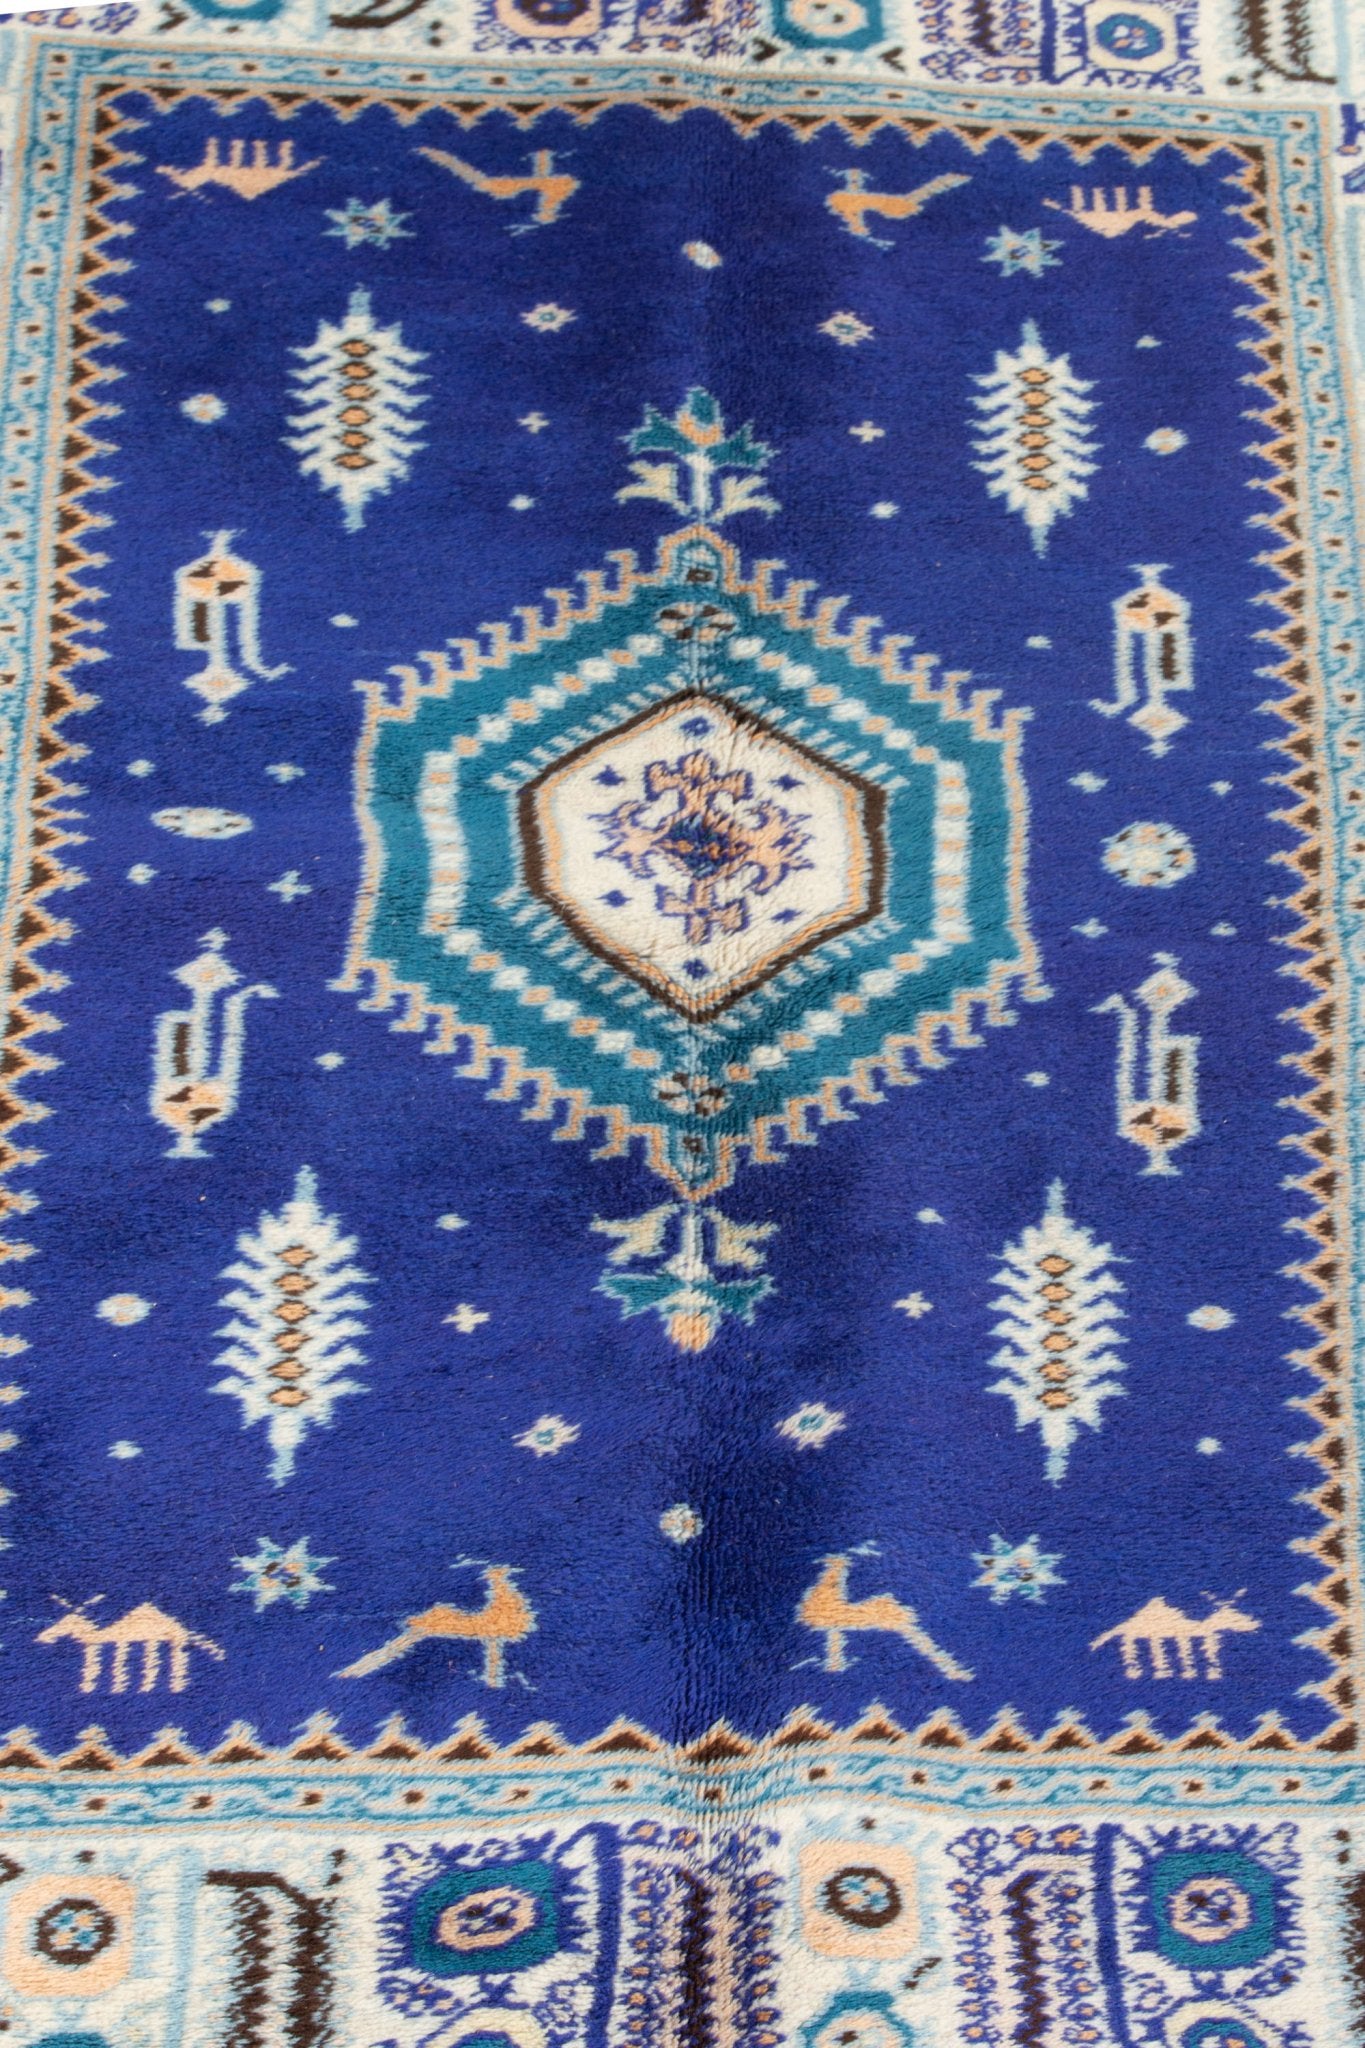 Vintage Rabat Moroccan Rug 6'98" x 10'76" - 213 cm x 328 cm (Wool) - Dar Bouchaib Marrakech